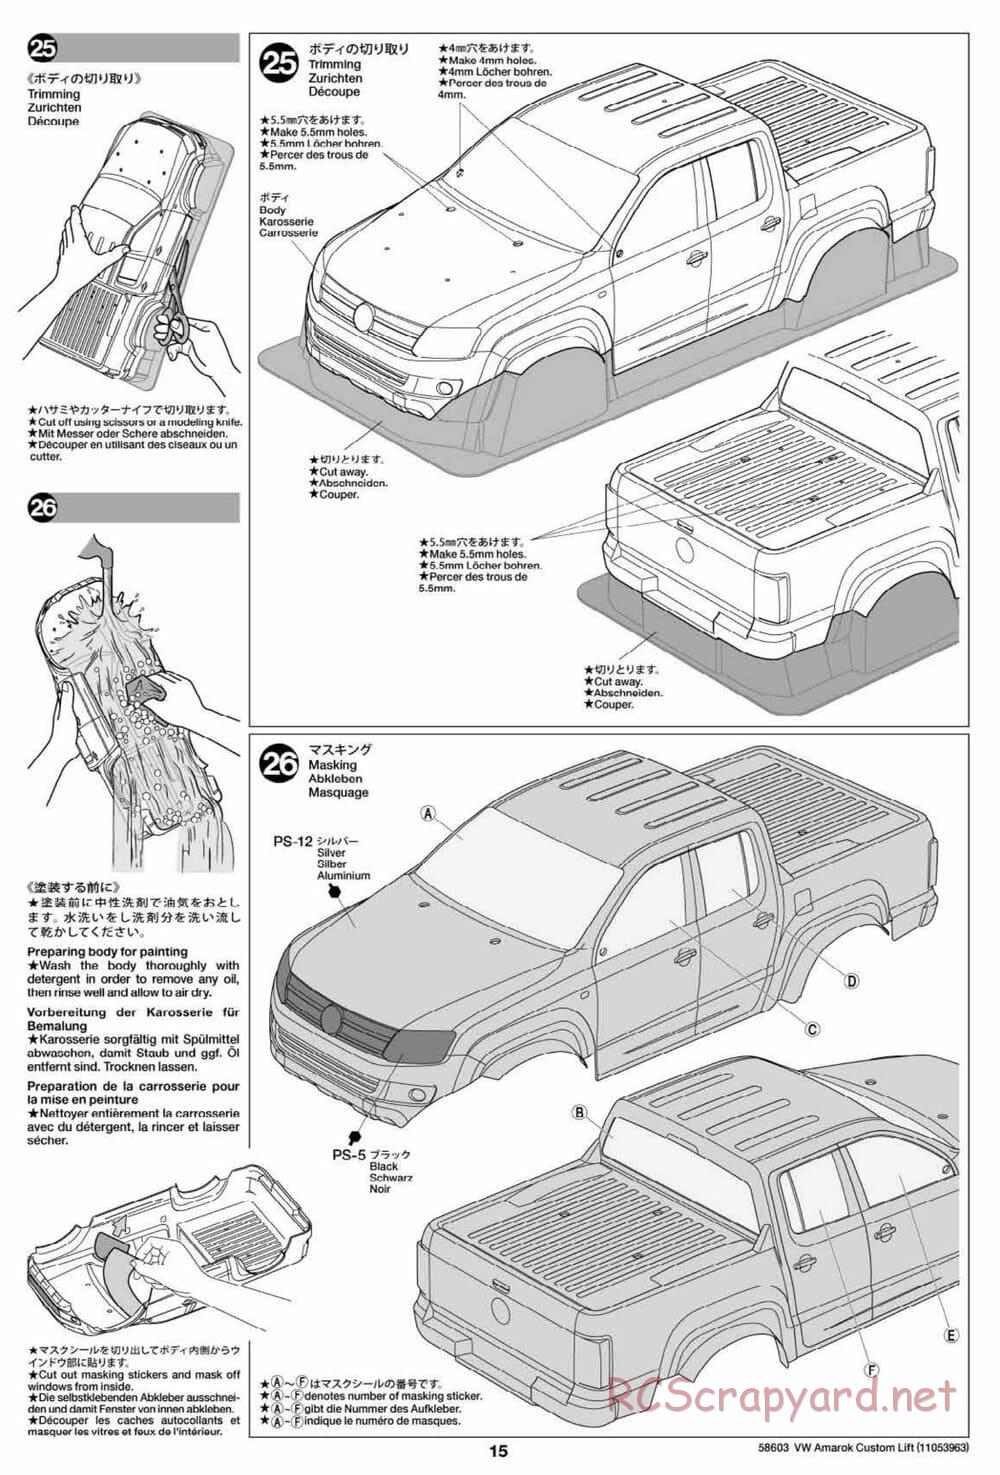 Tamiya - Volkswagen Amarok Custom Lift - WT-01N Chassis - Manual - Page 15